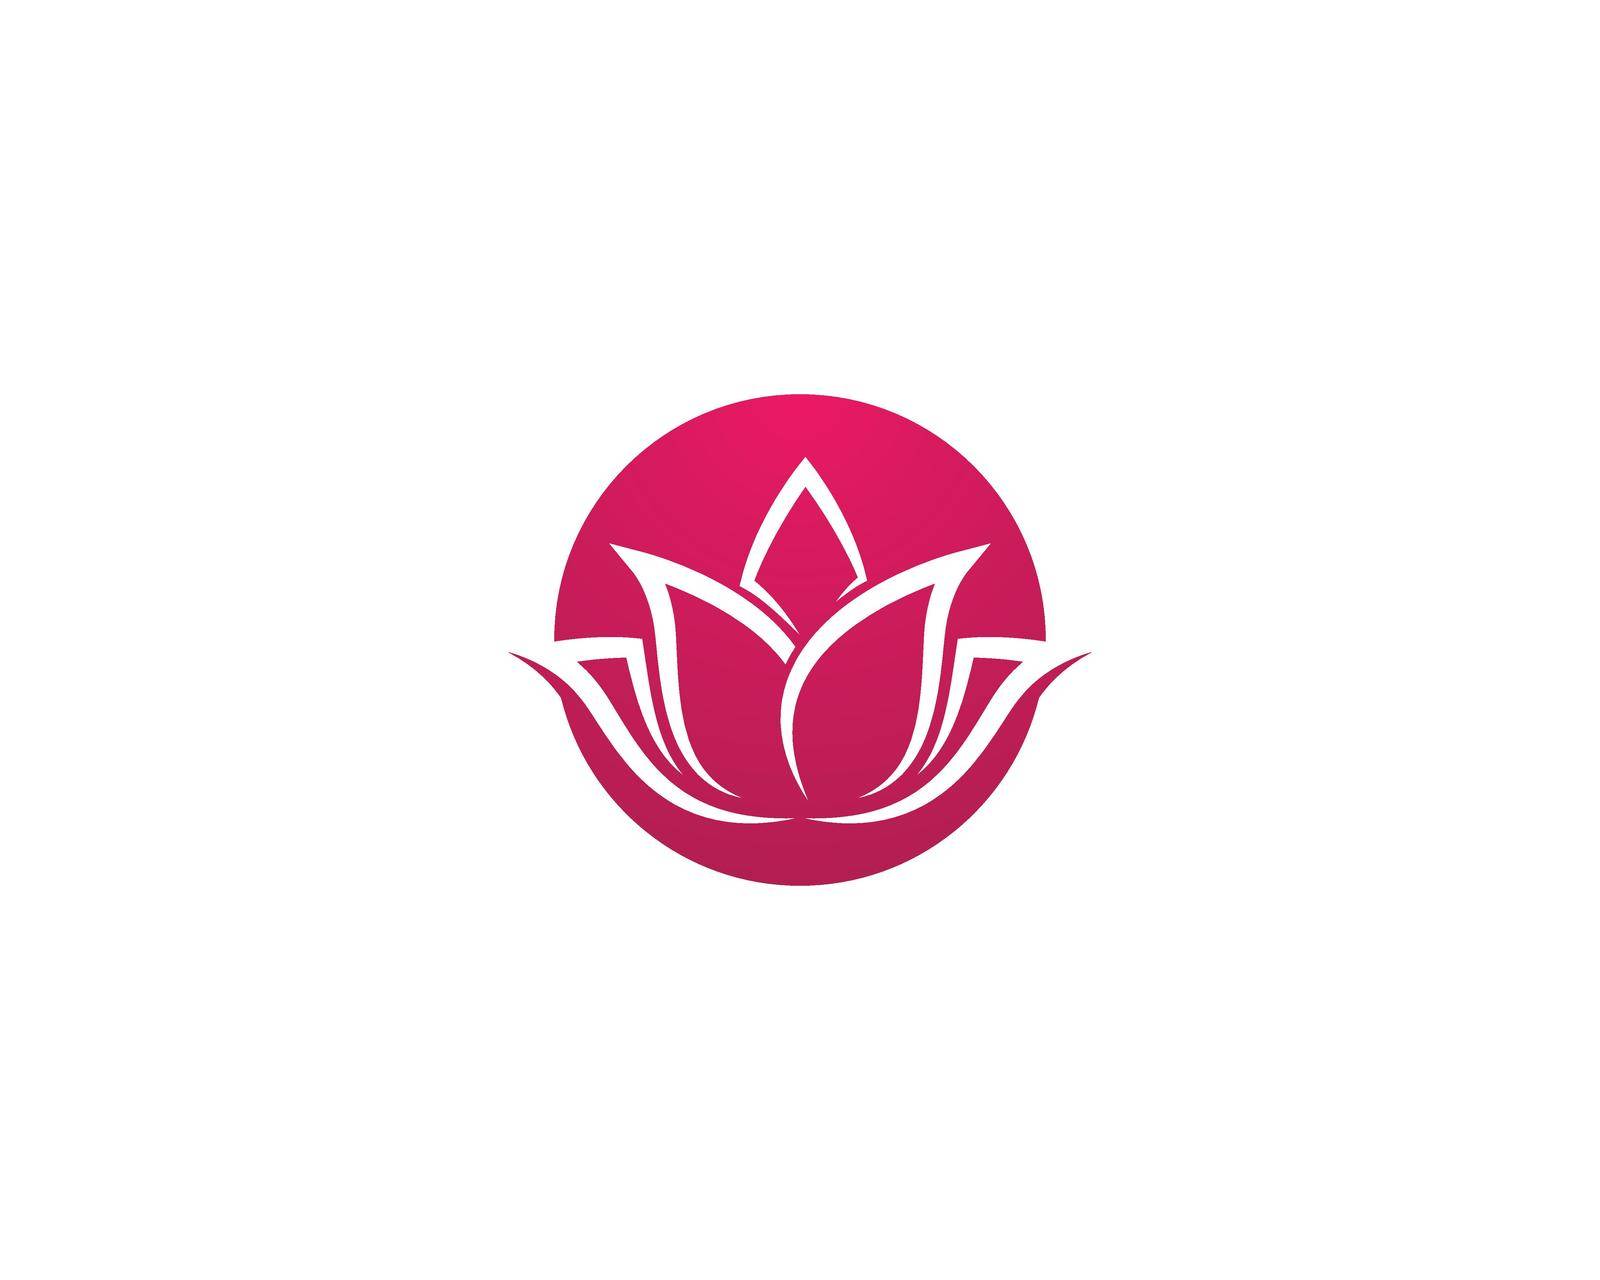 Lotus symbol vector icon illustration by Fat17